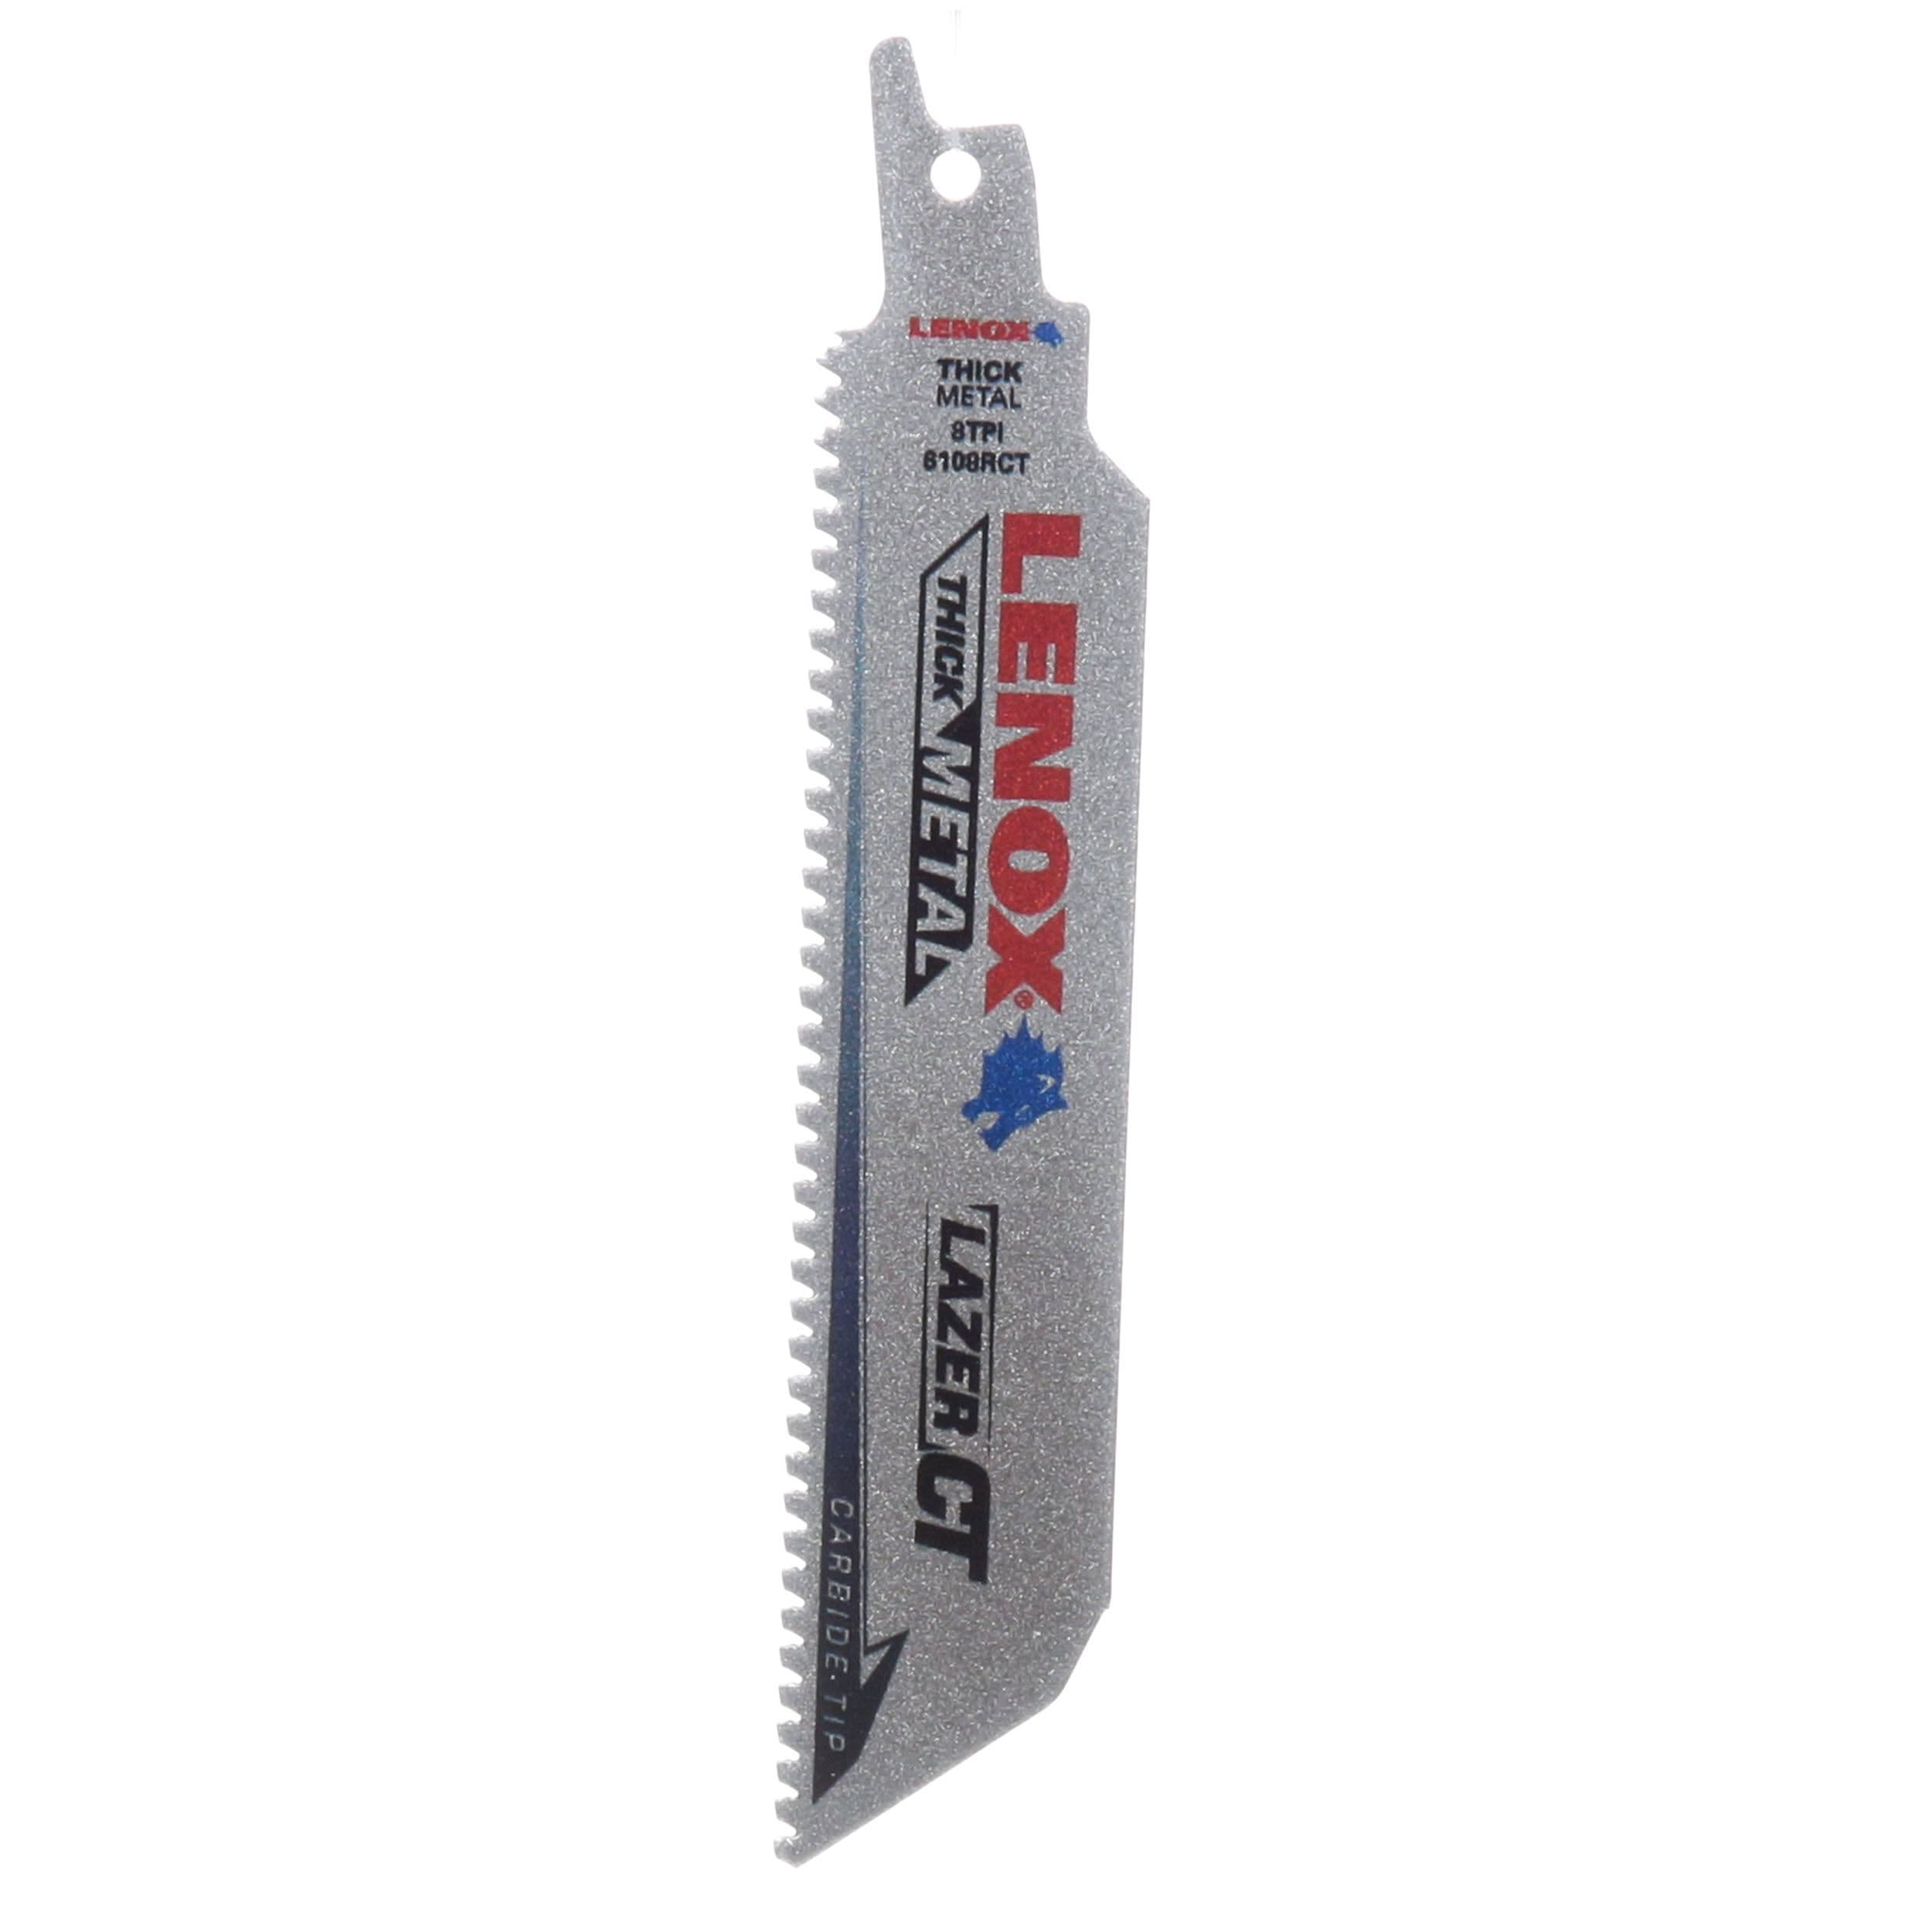 2 Lenox 6" 8 TPI Carbide Tip Thick Metal Reciprocating Saw Blades 2014220 